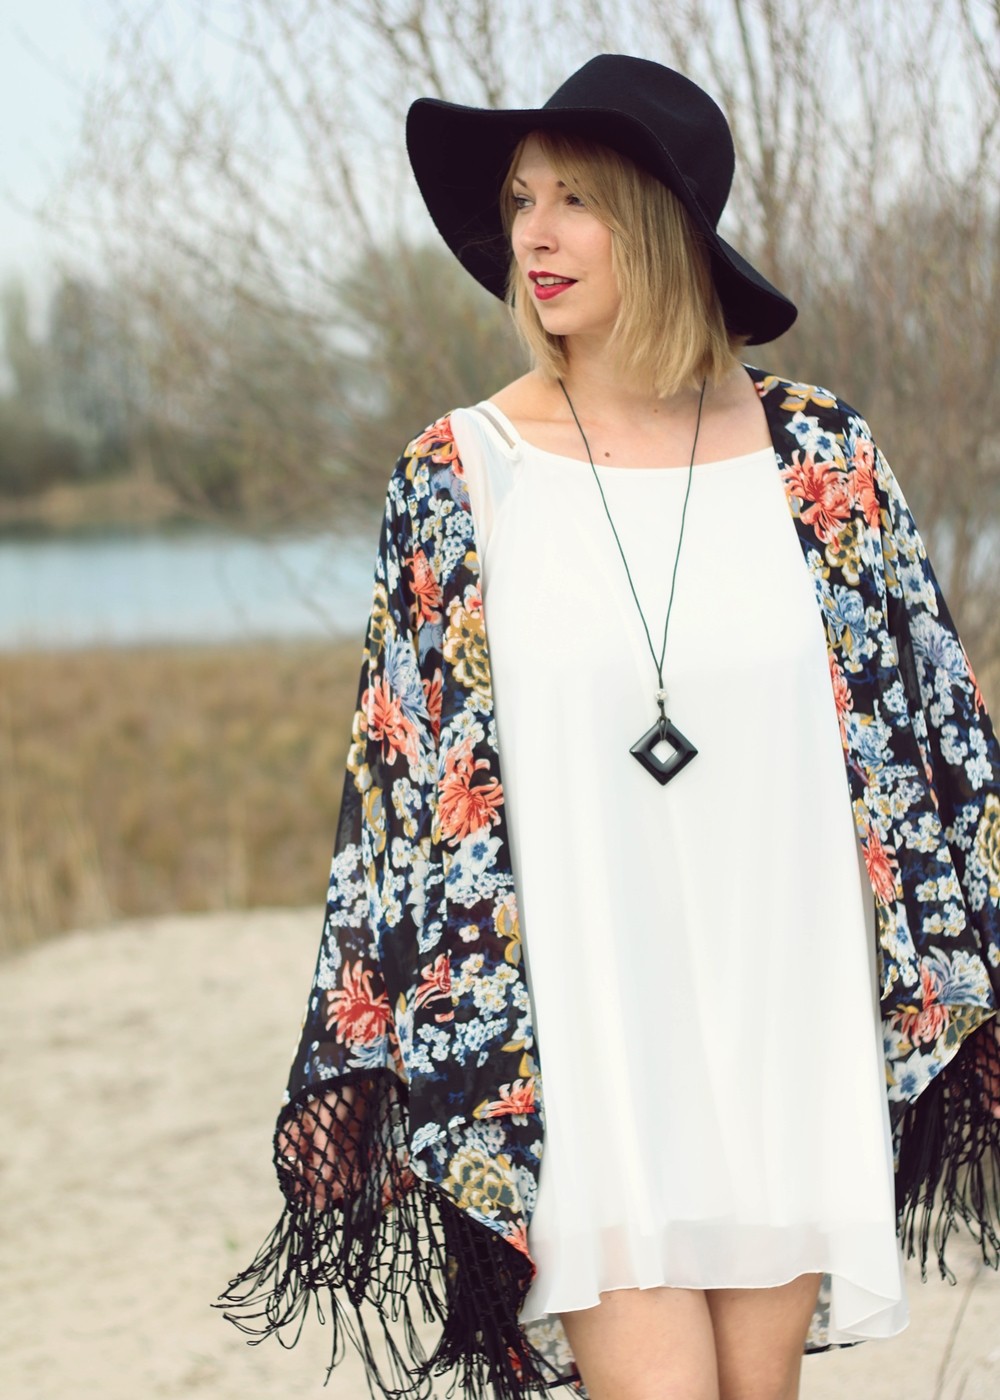 Fashionblogger Outfit Kimono weisses Kleid Cowboystiefel Schlapphut (9)